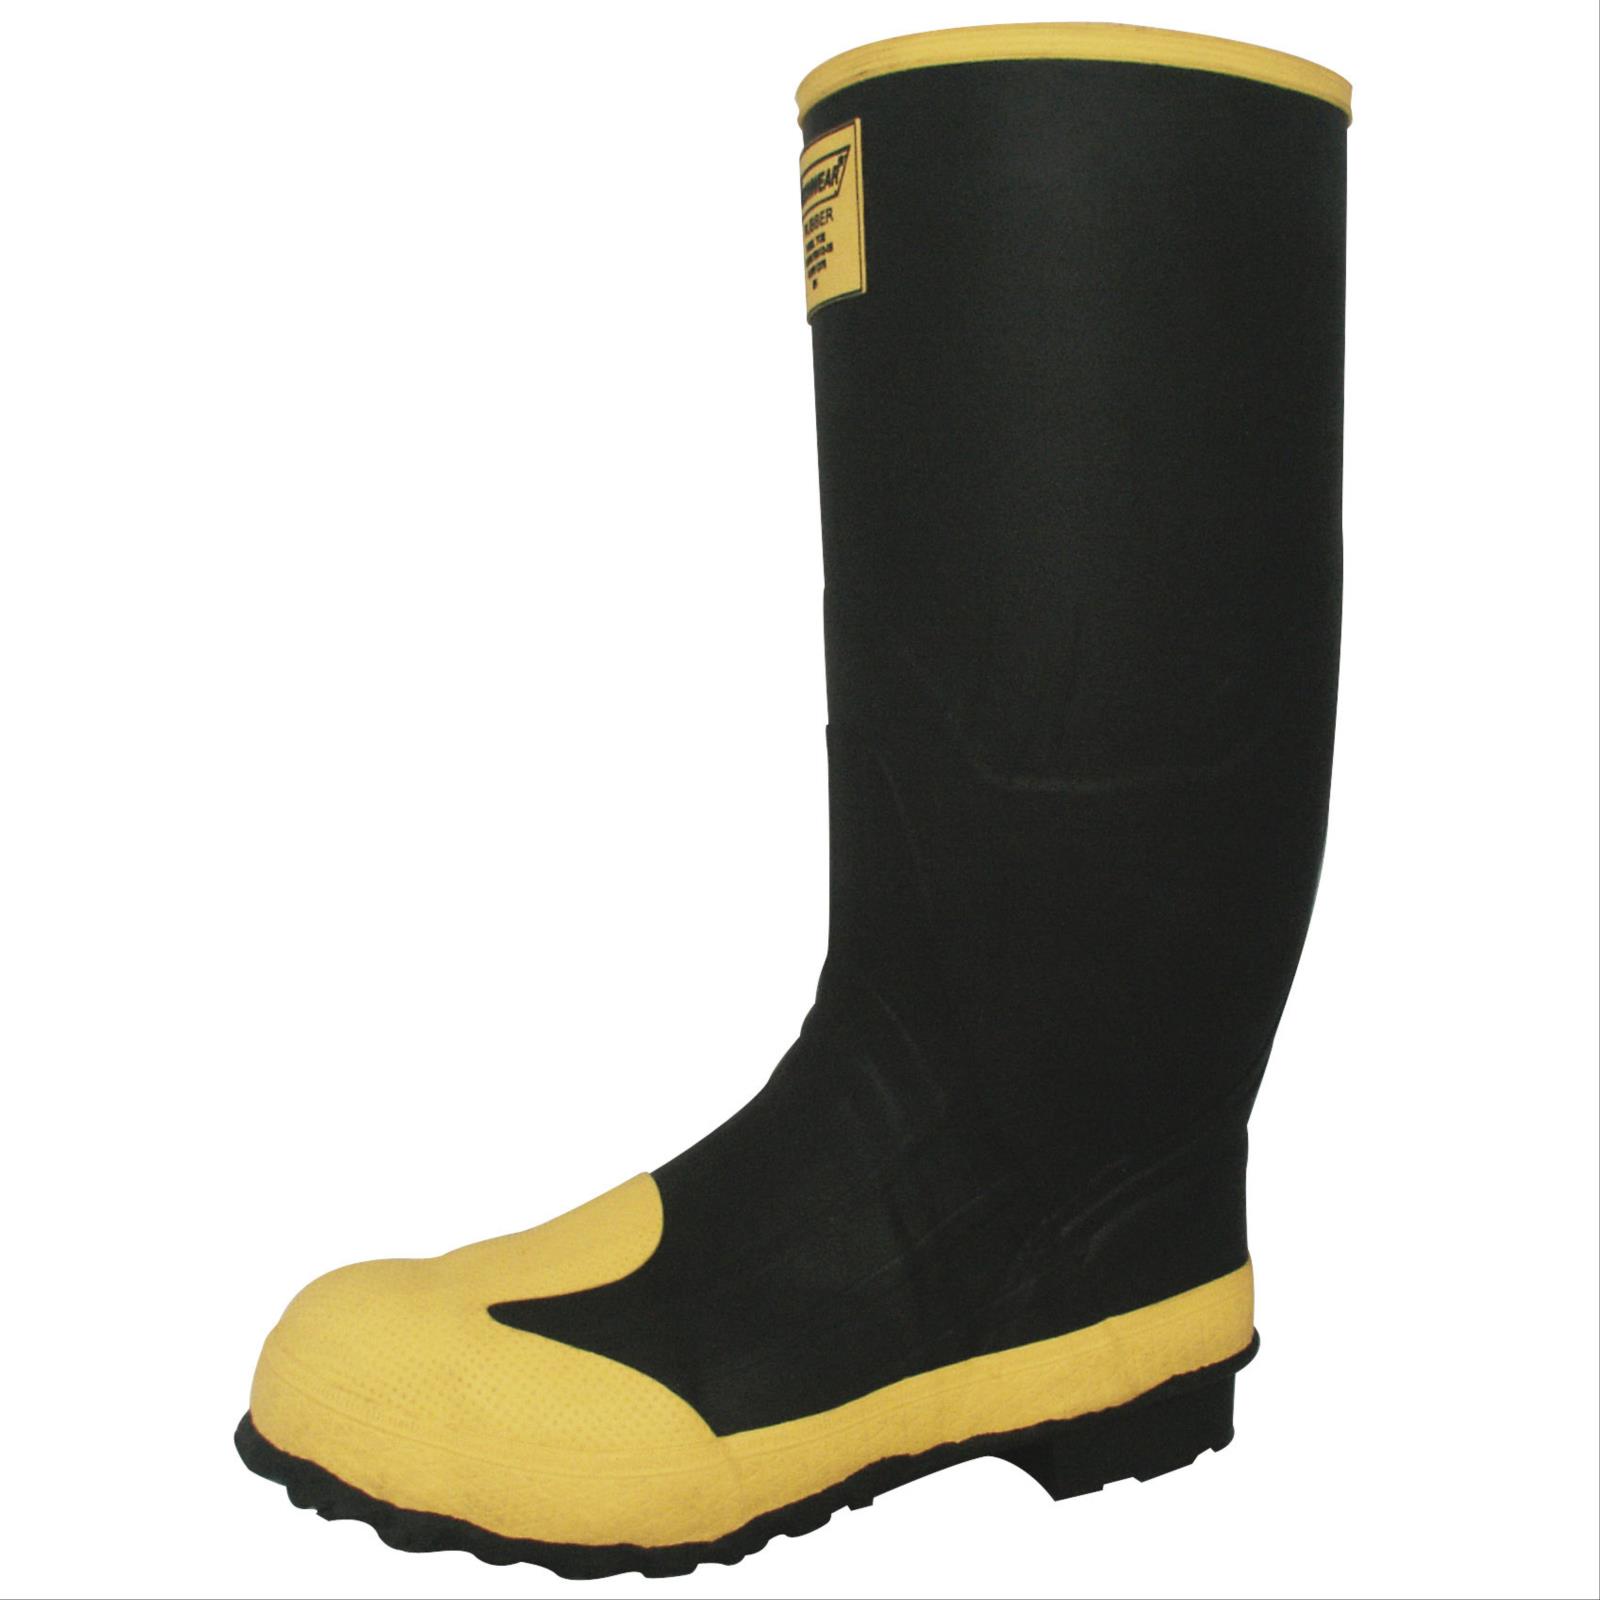 Metatarsal Waterproof Boot